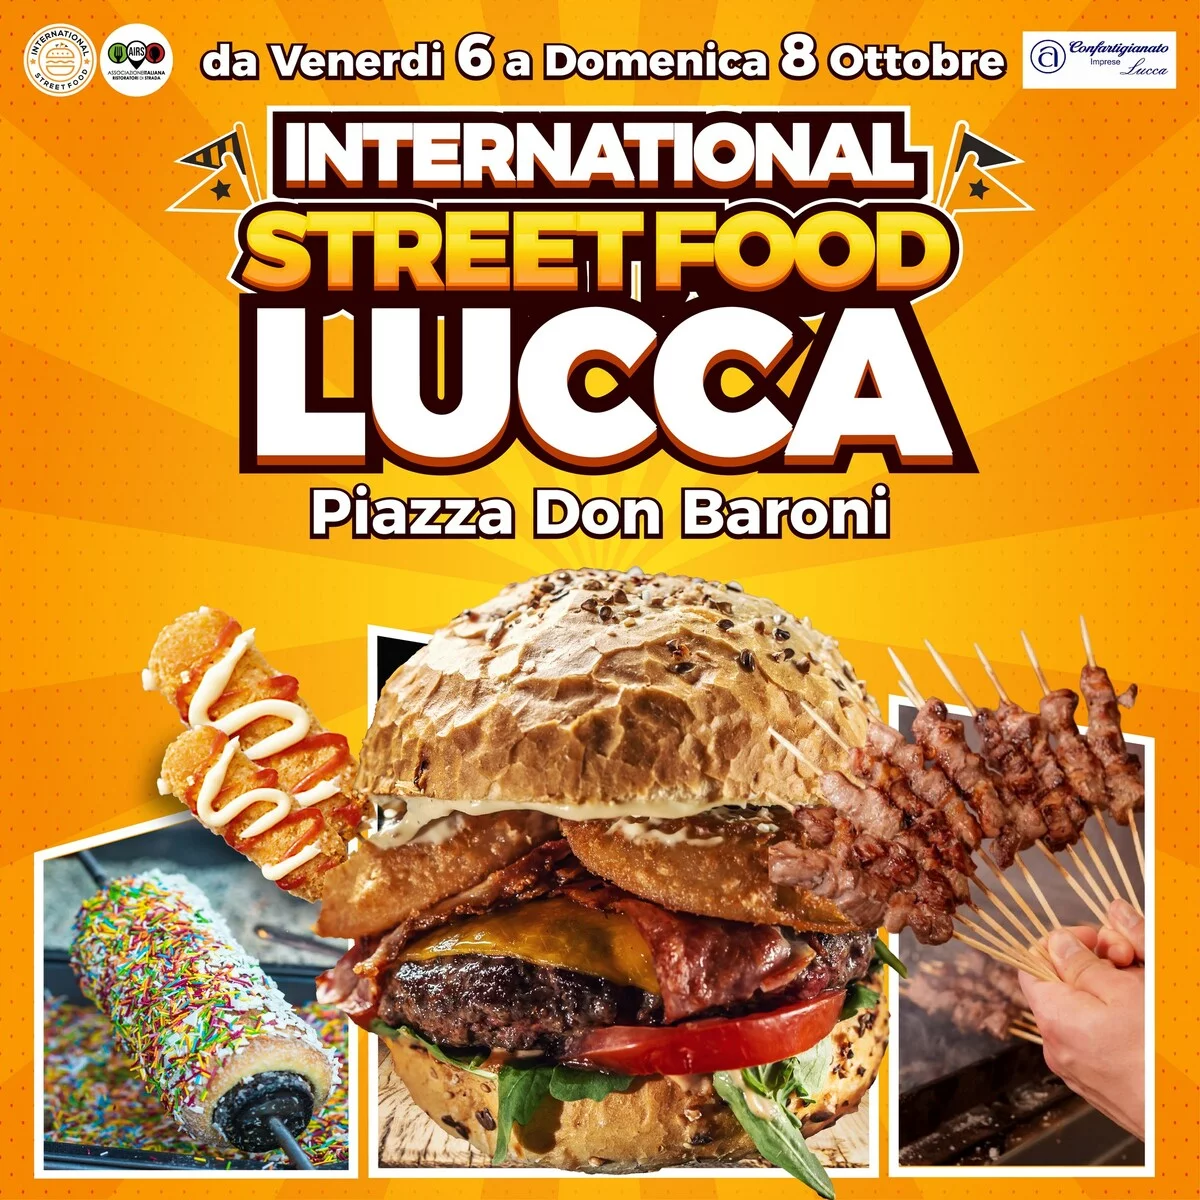 International Street Food - Lucca